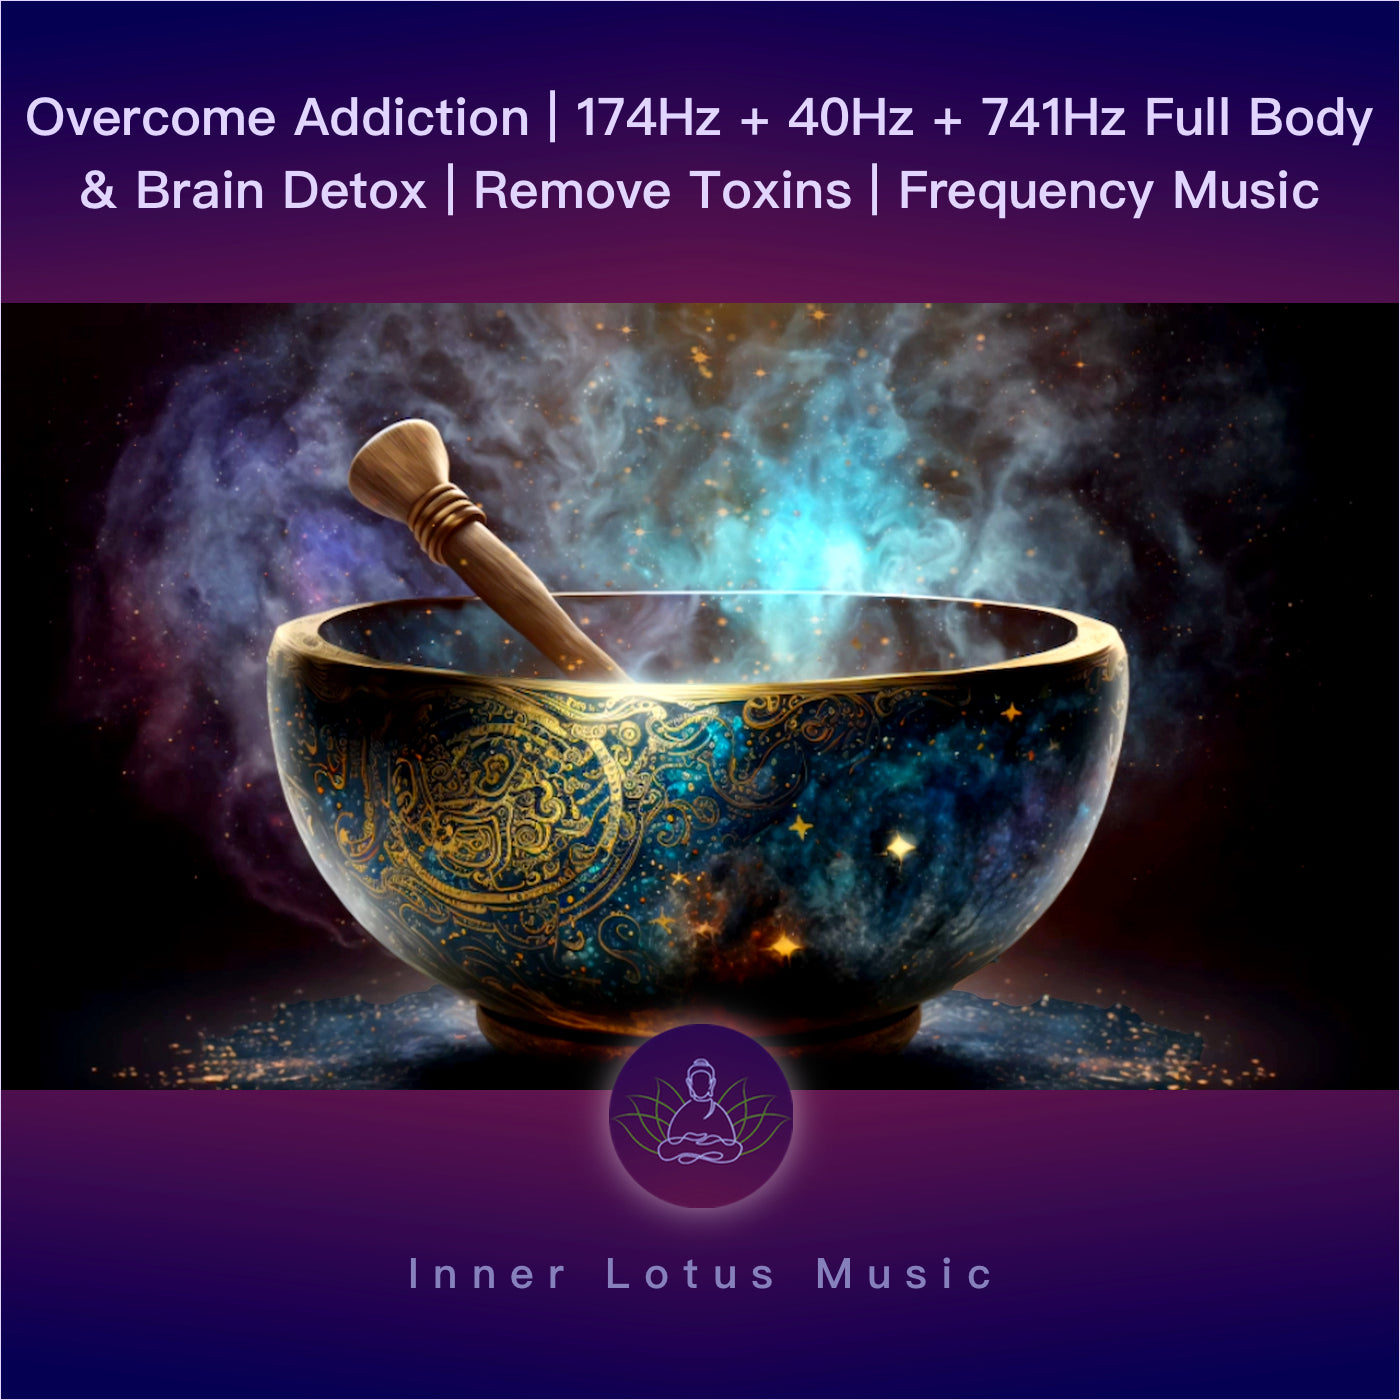 Overcome Addiction | 174Hz + 40Hz + 741Hz Full Body & Brain Detox | Remove Toxins | Frequency Music